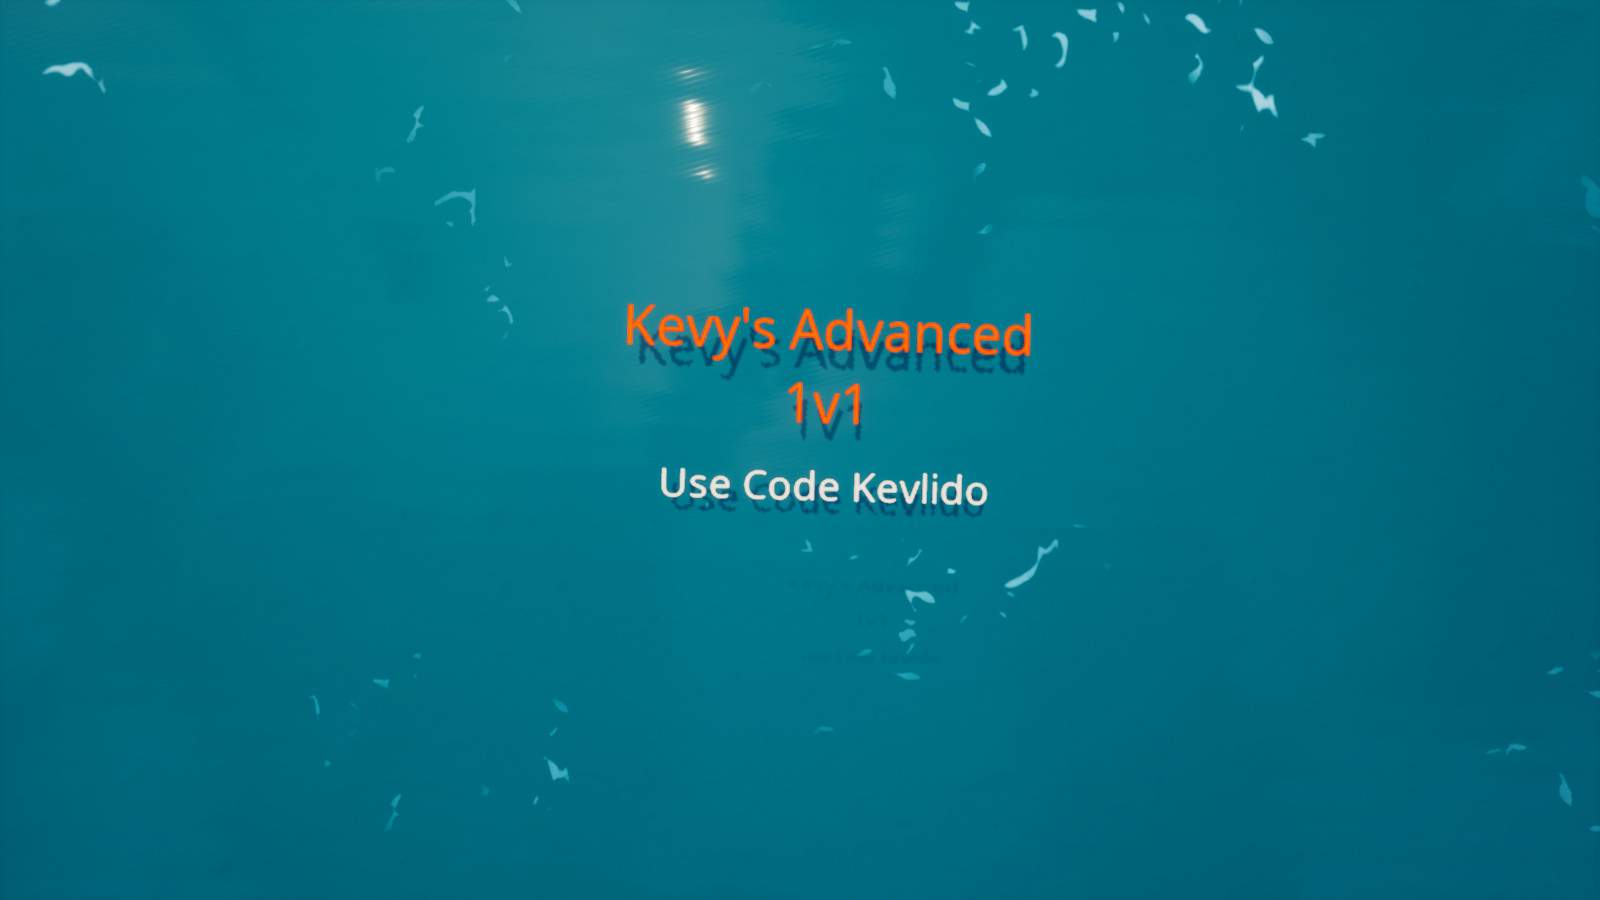 KEVY'S ADVANCED 1V1